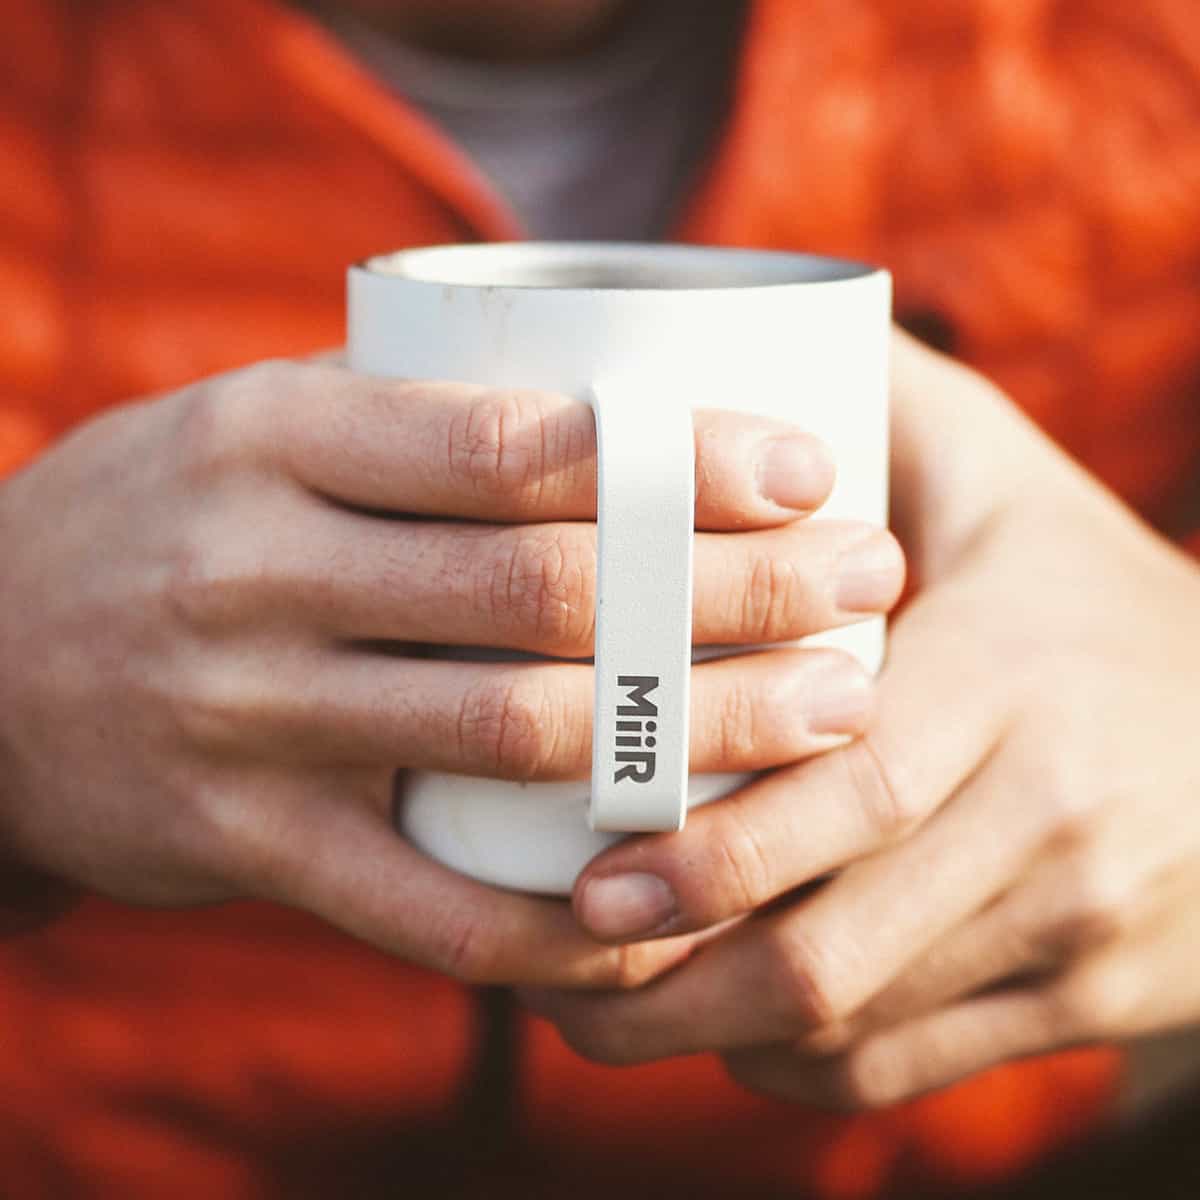 Branded Coffee Mug